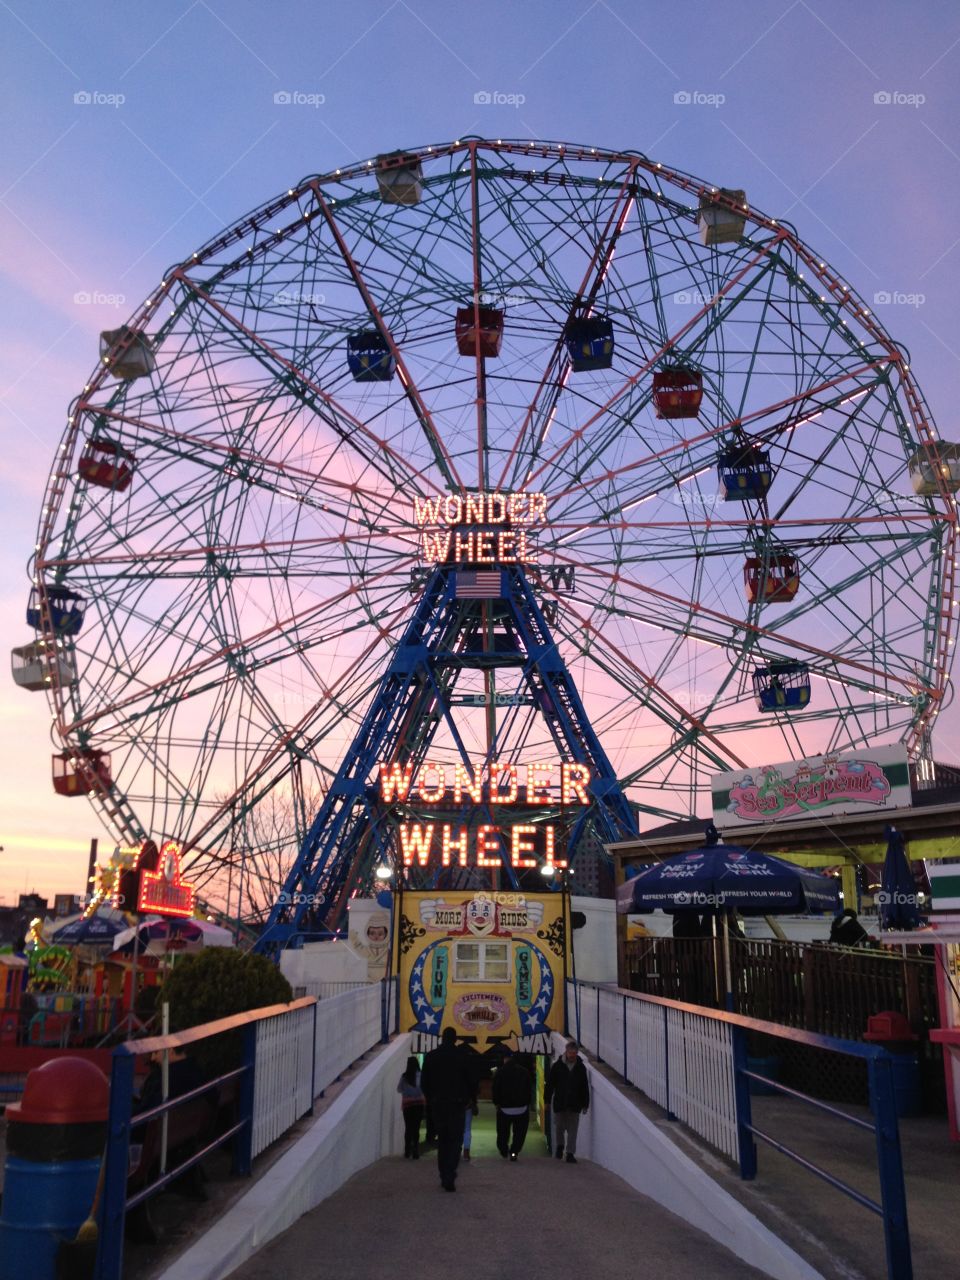 Wonder Wheel at Coney Island, New York